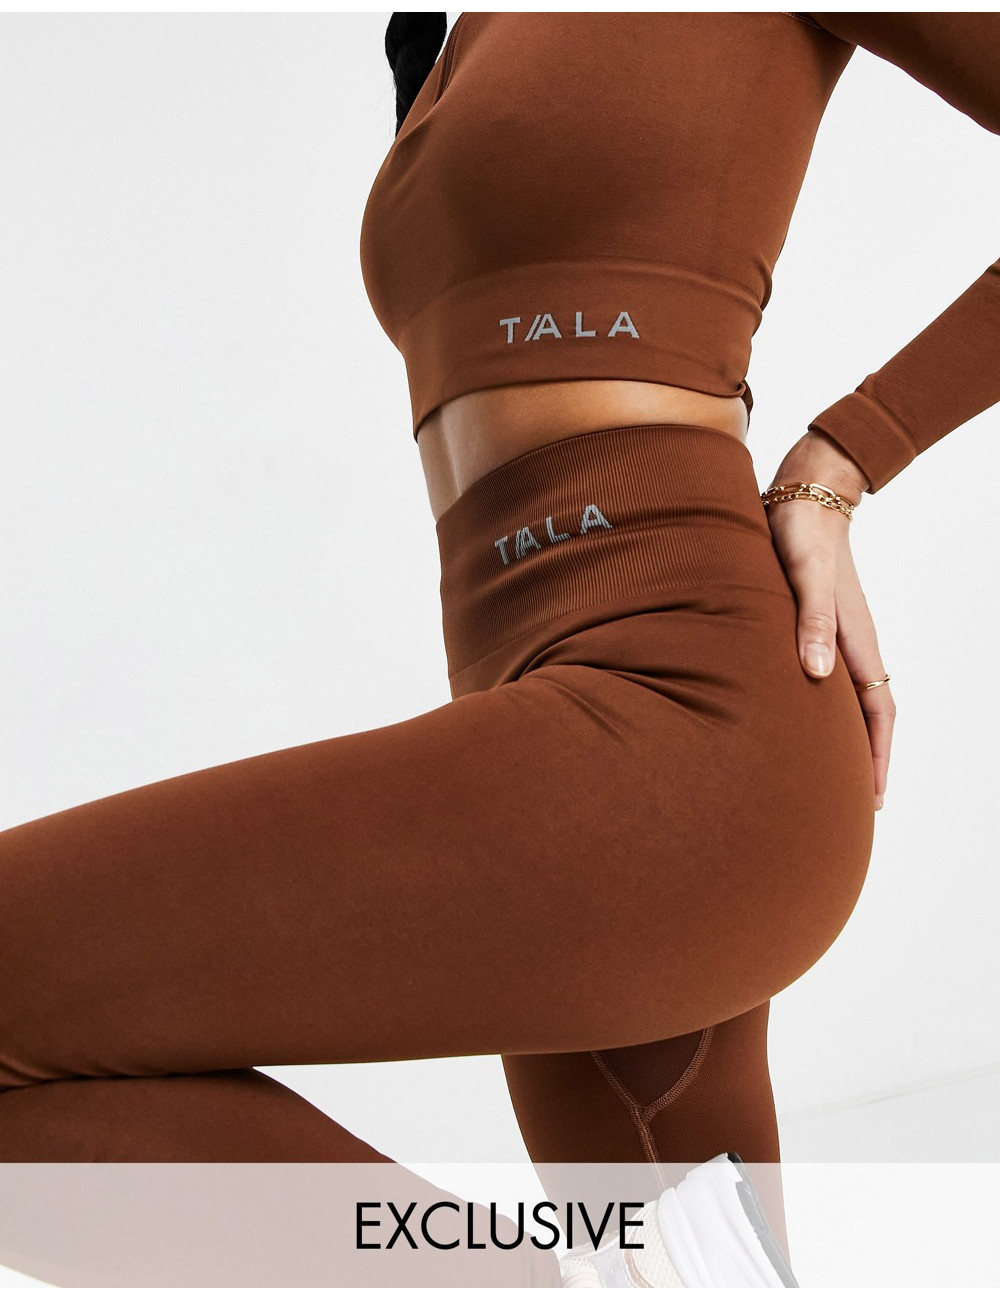 Tala + The Zinnia Legging from Tala